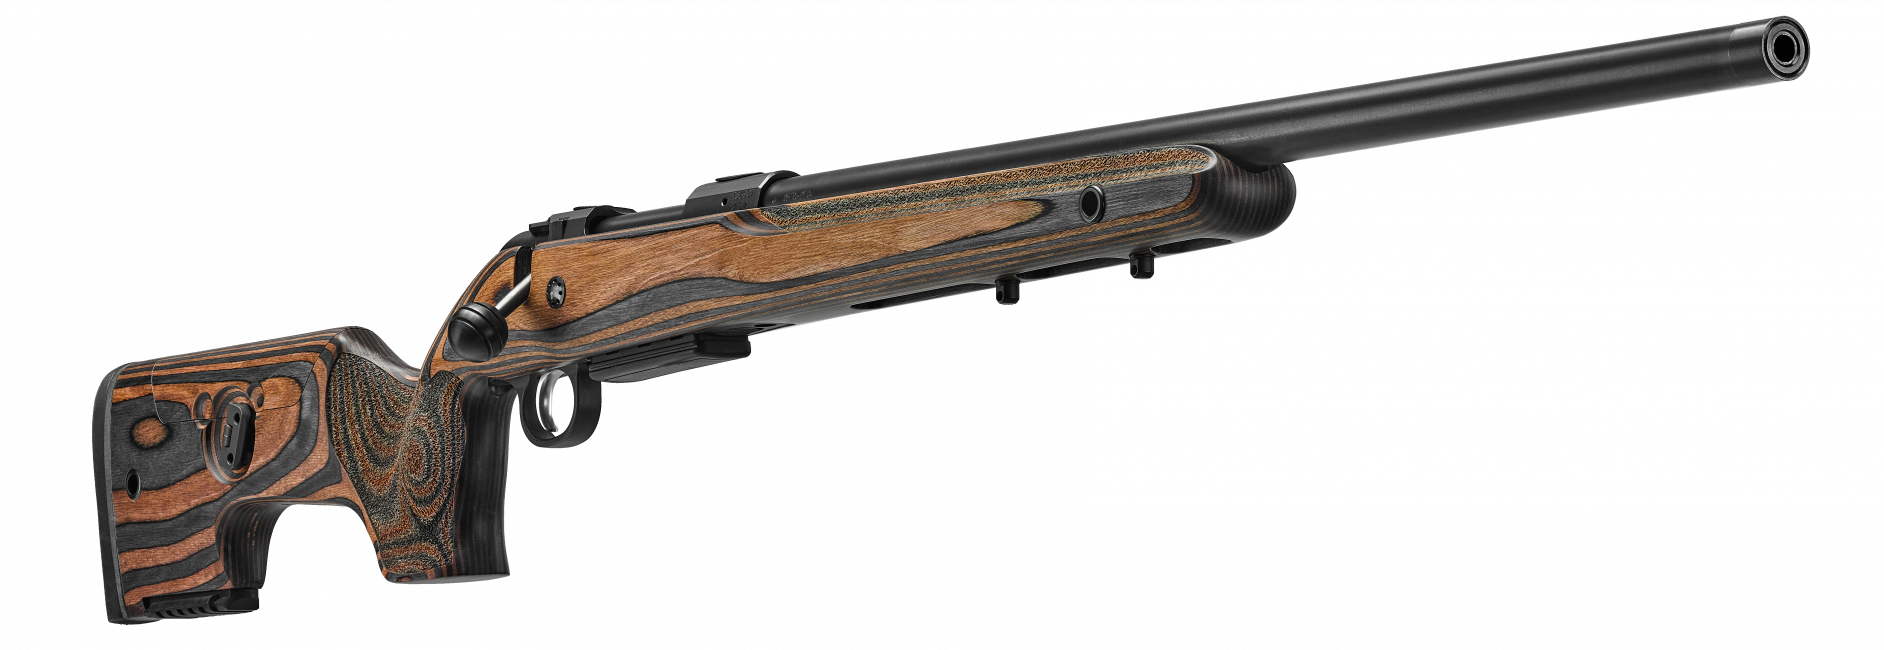 CZ-USA 600 Range versatile target and hunting rifle